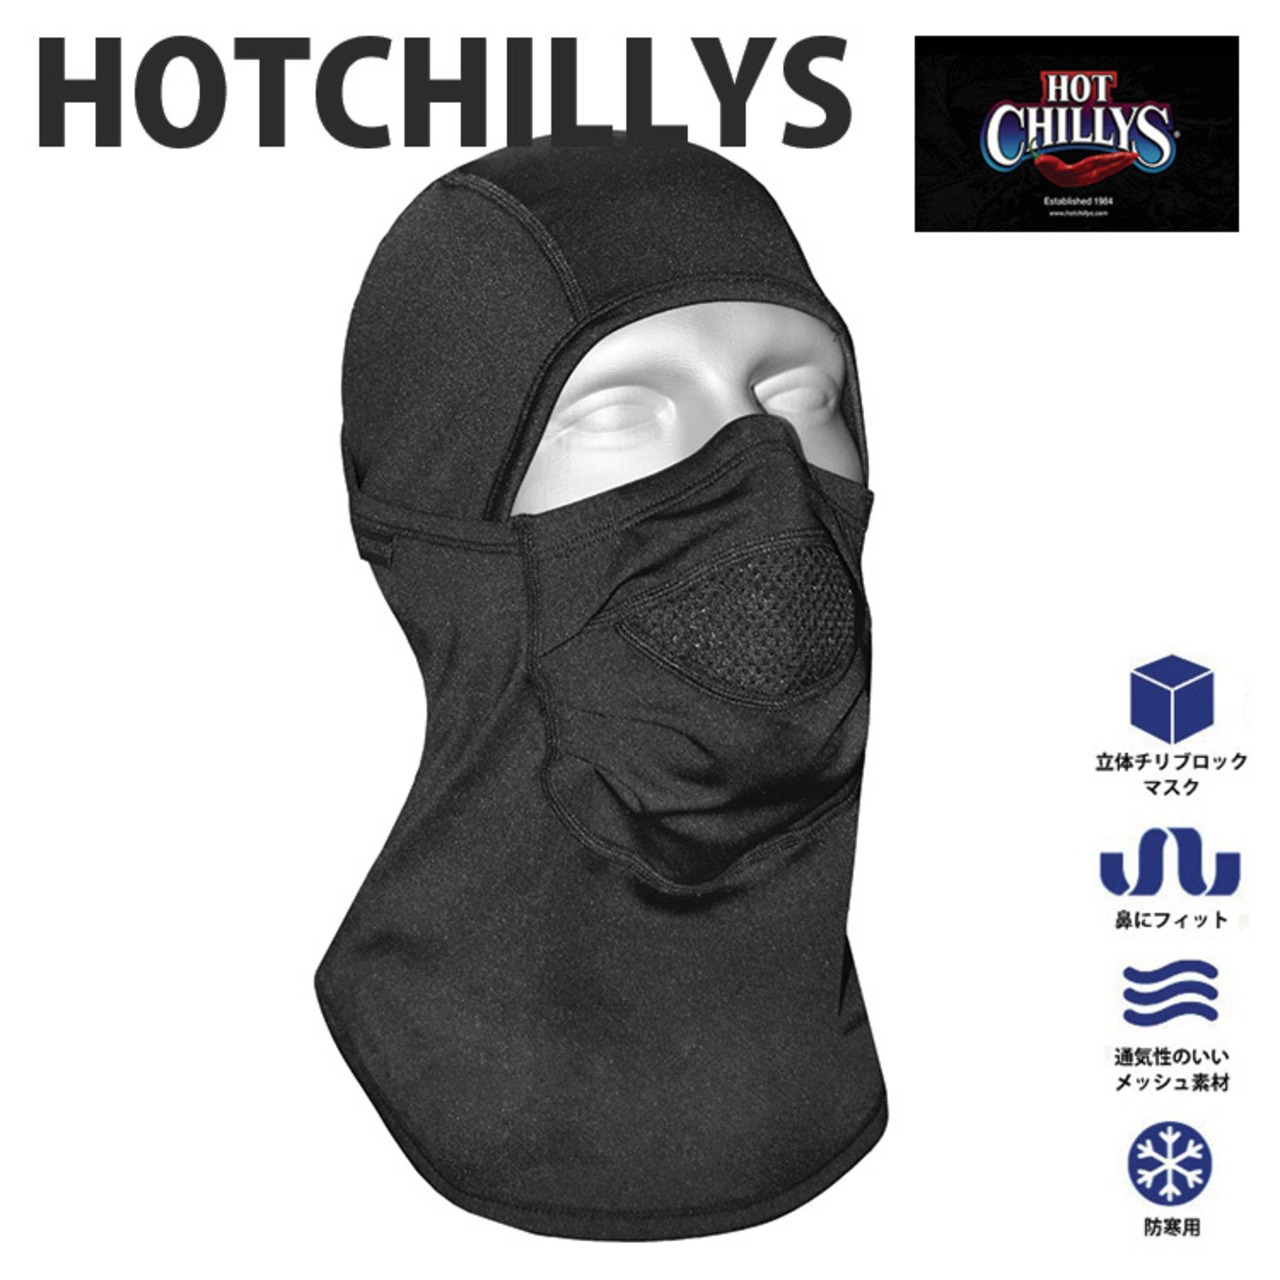 HOT CHILLYS (ホットチリーズ) マイクロエリート シャモア マスク HC6127